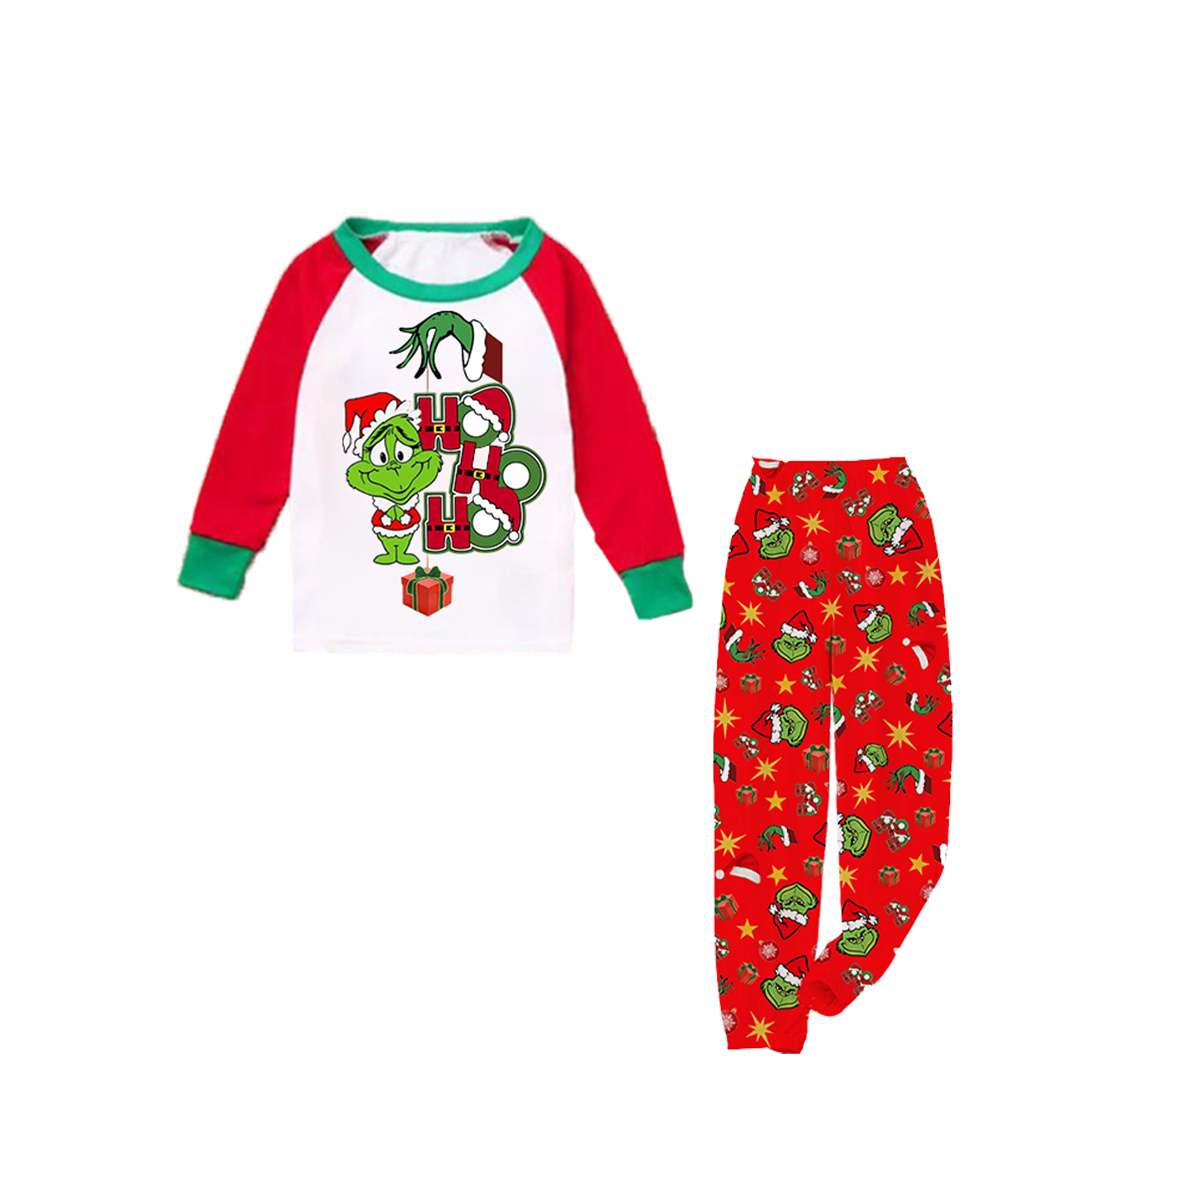 Baby Toddler Boys Girls Christmas Sleepwear Pajamas Red Hohoho Slogan Sets